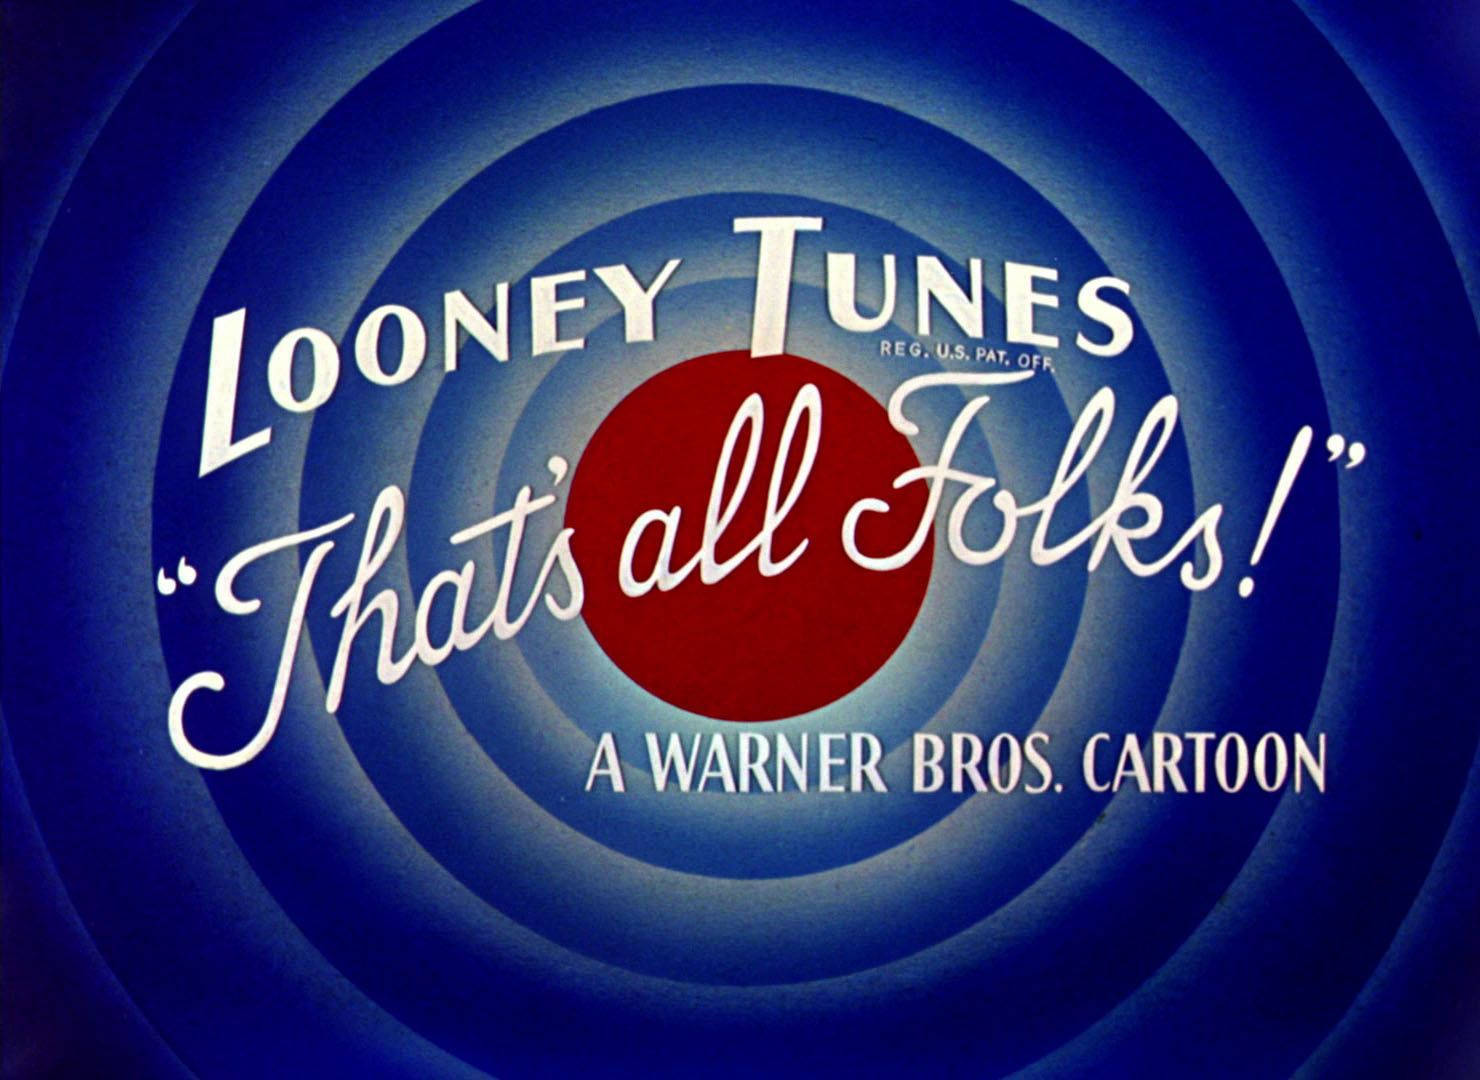 looney tunes logo thats all folks